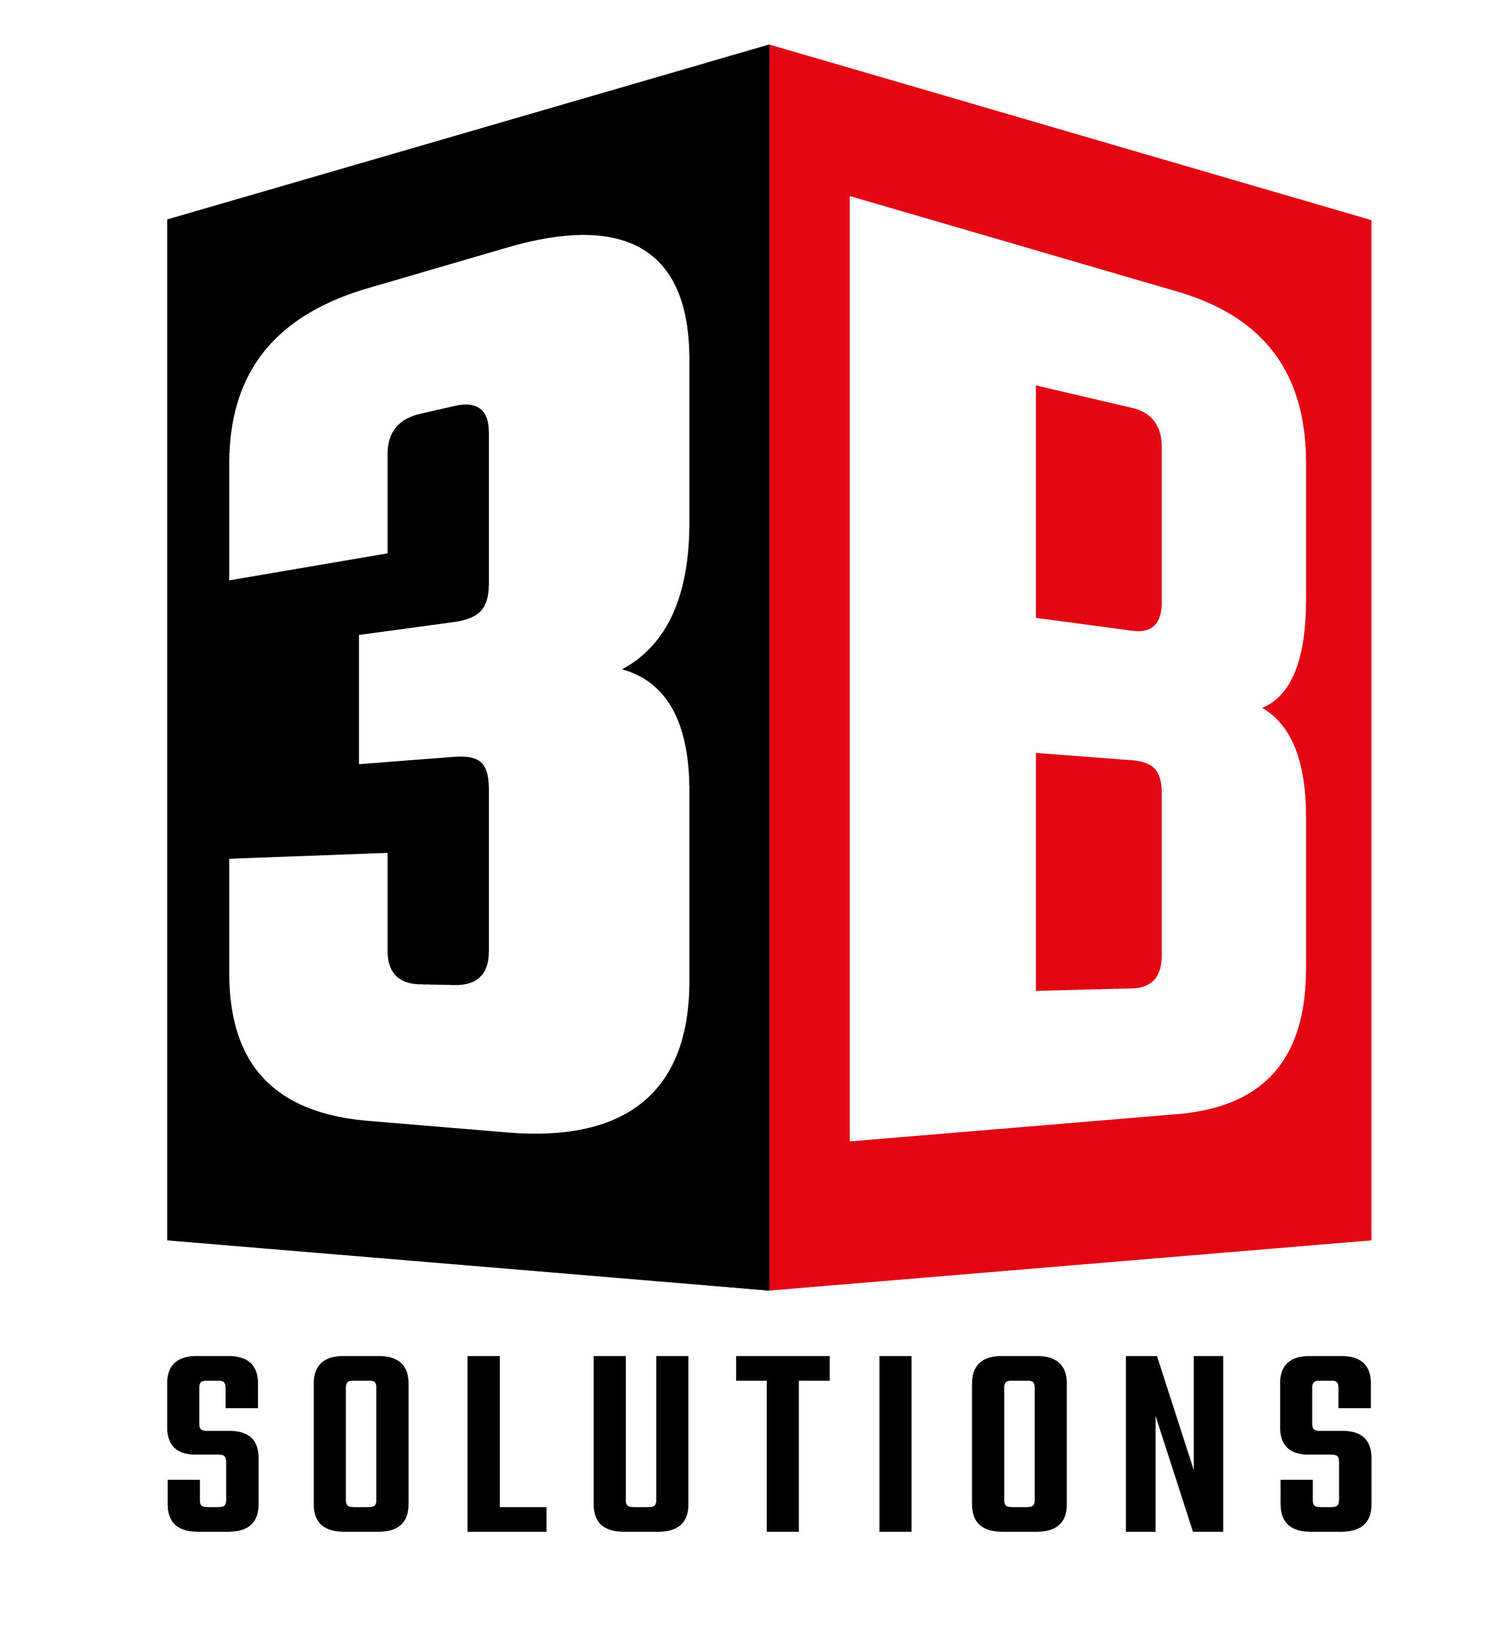 3B Solutions